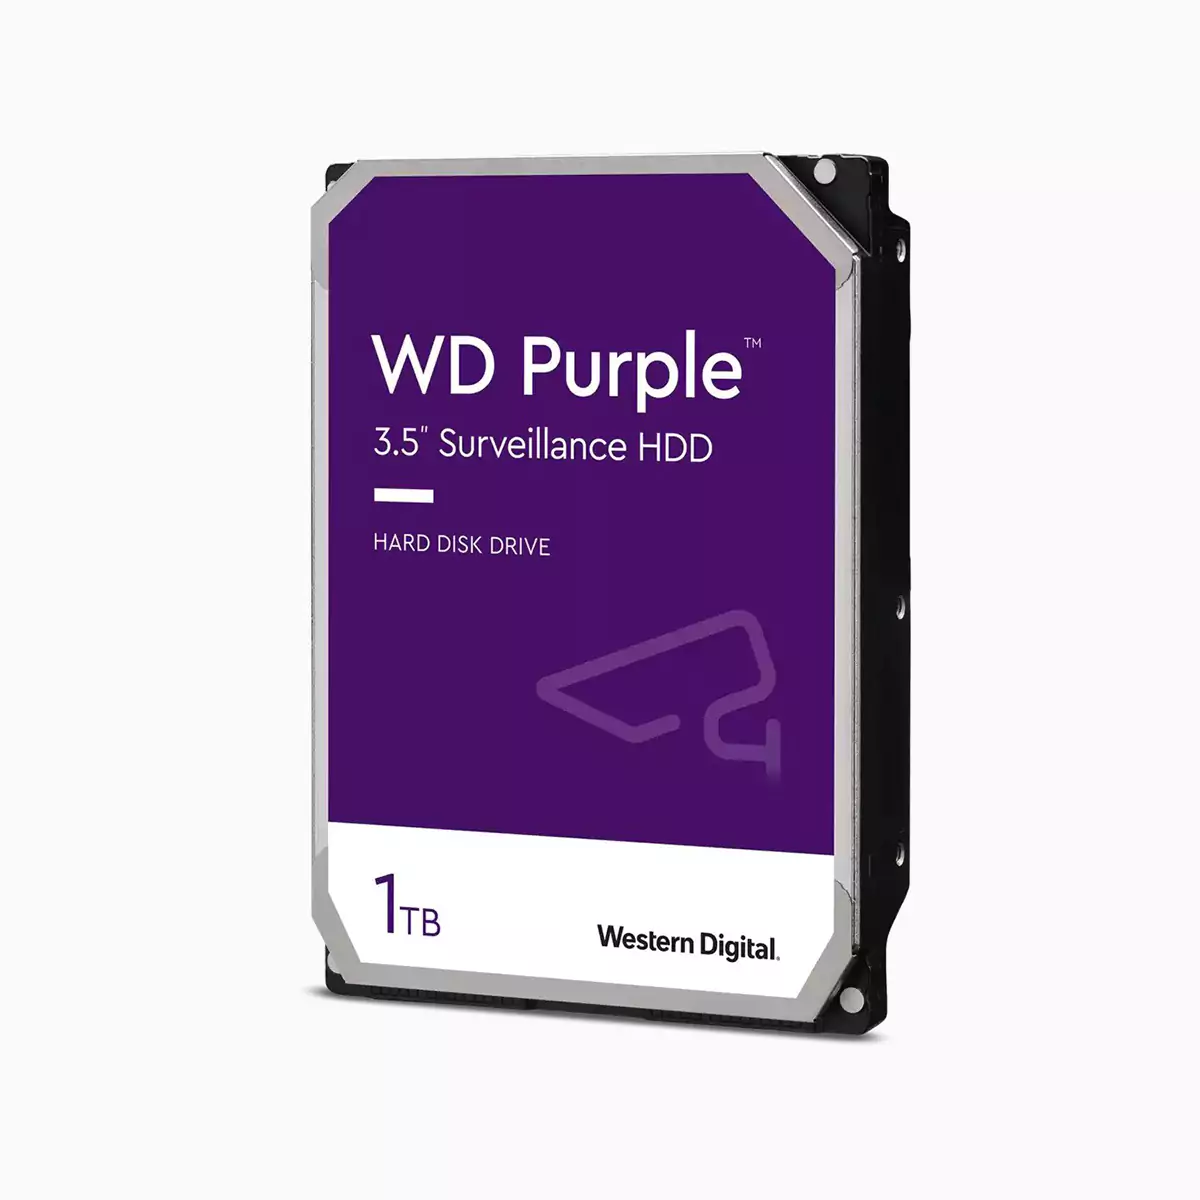 WD Purple 1TB 3.5" SATA III Surveillance Hard Drive